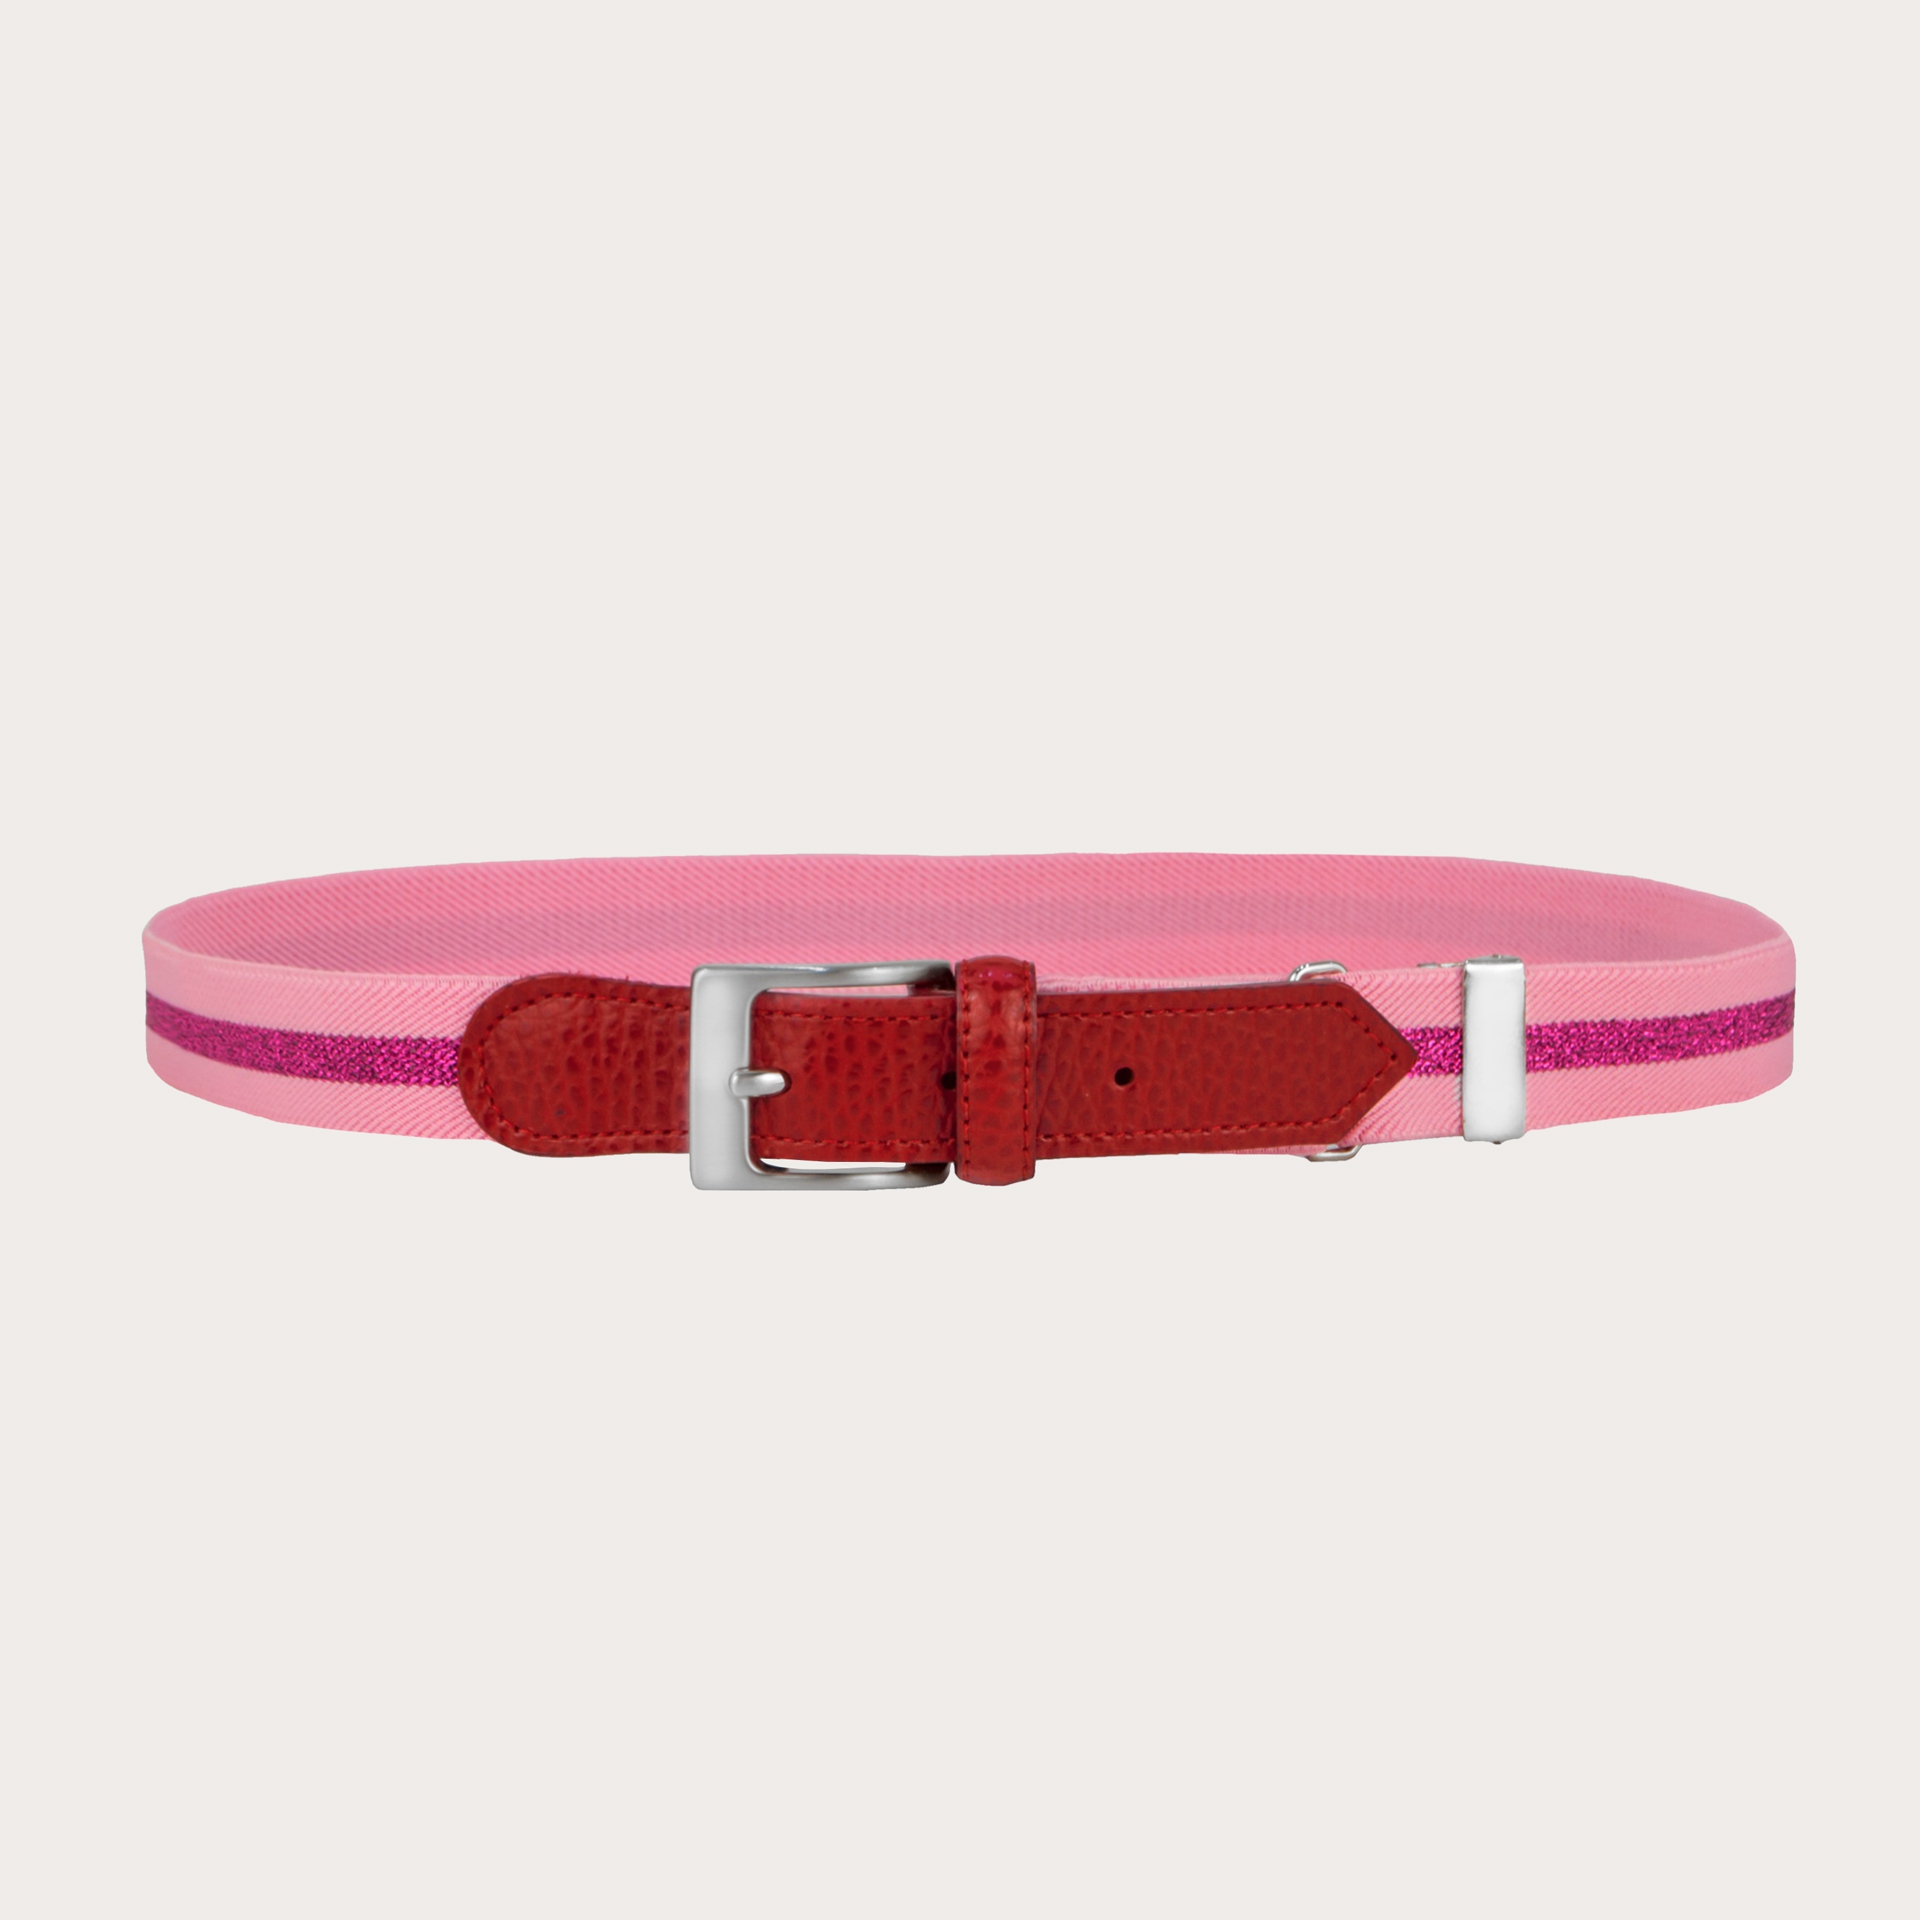 Kids belt pink